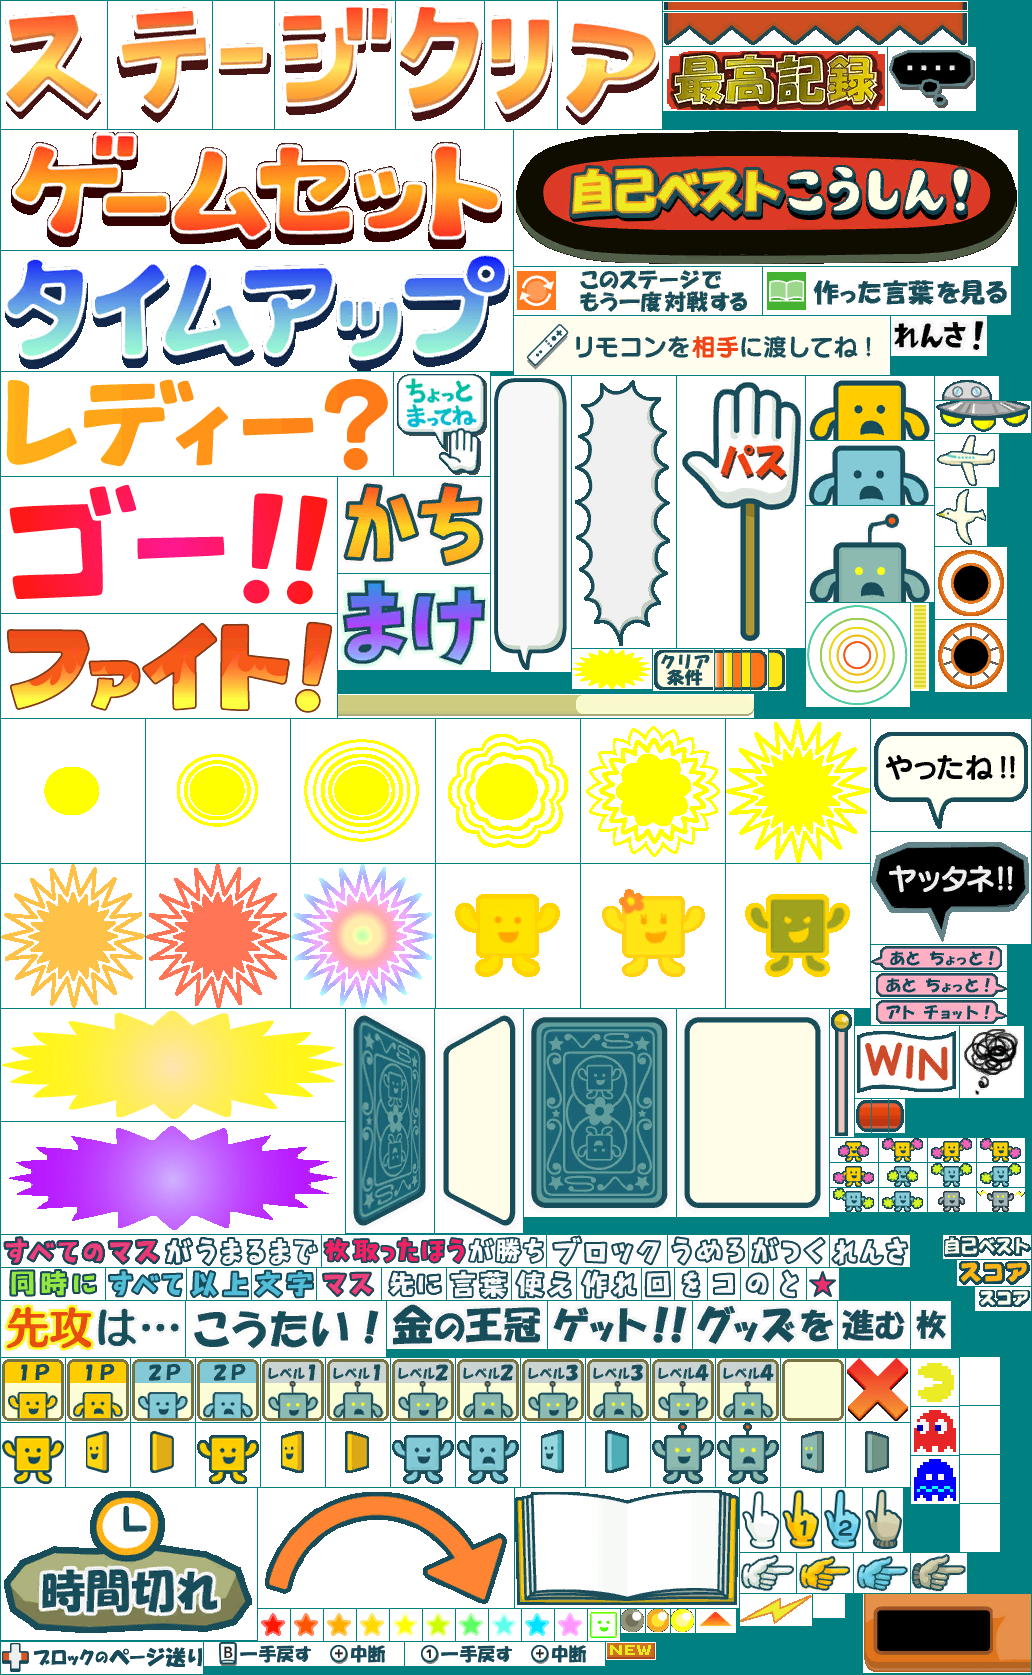 Kotoba no Puzzle: Mojipittan Wii Deluxe (JPN) - Miscellaneous